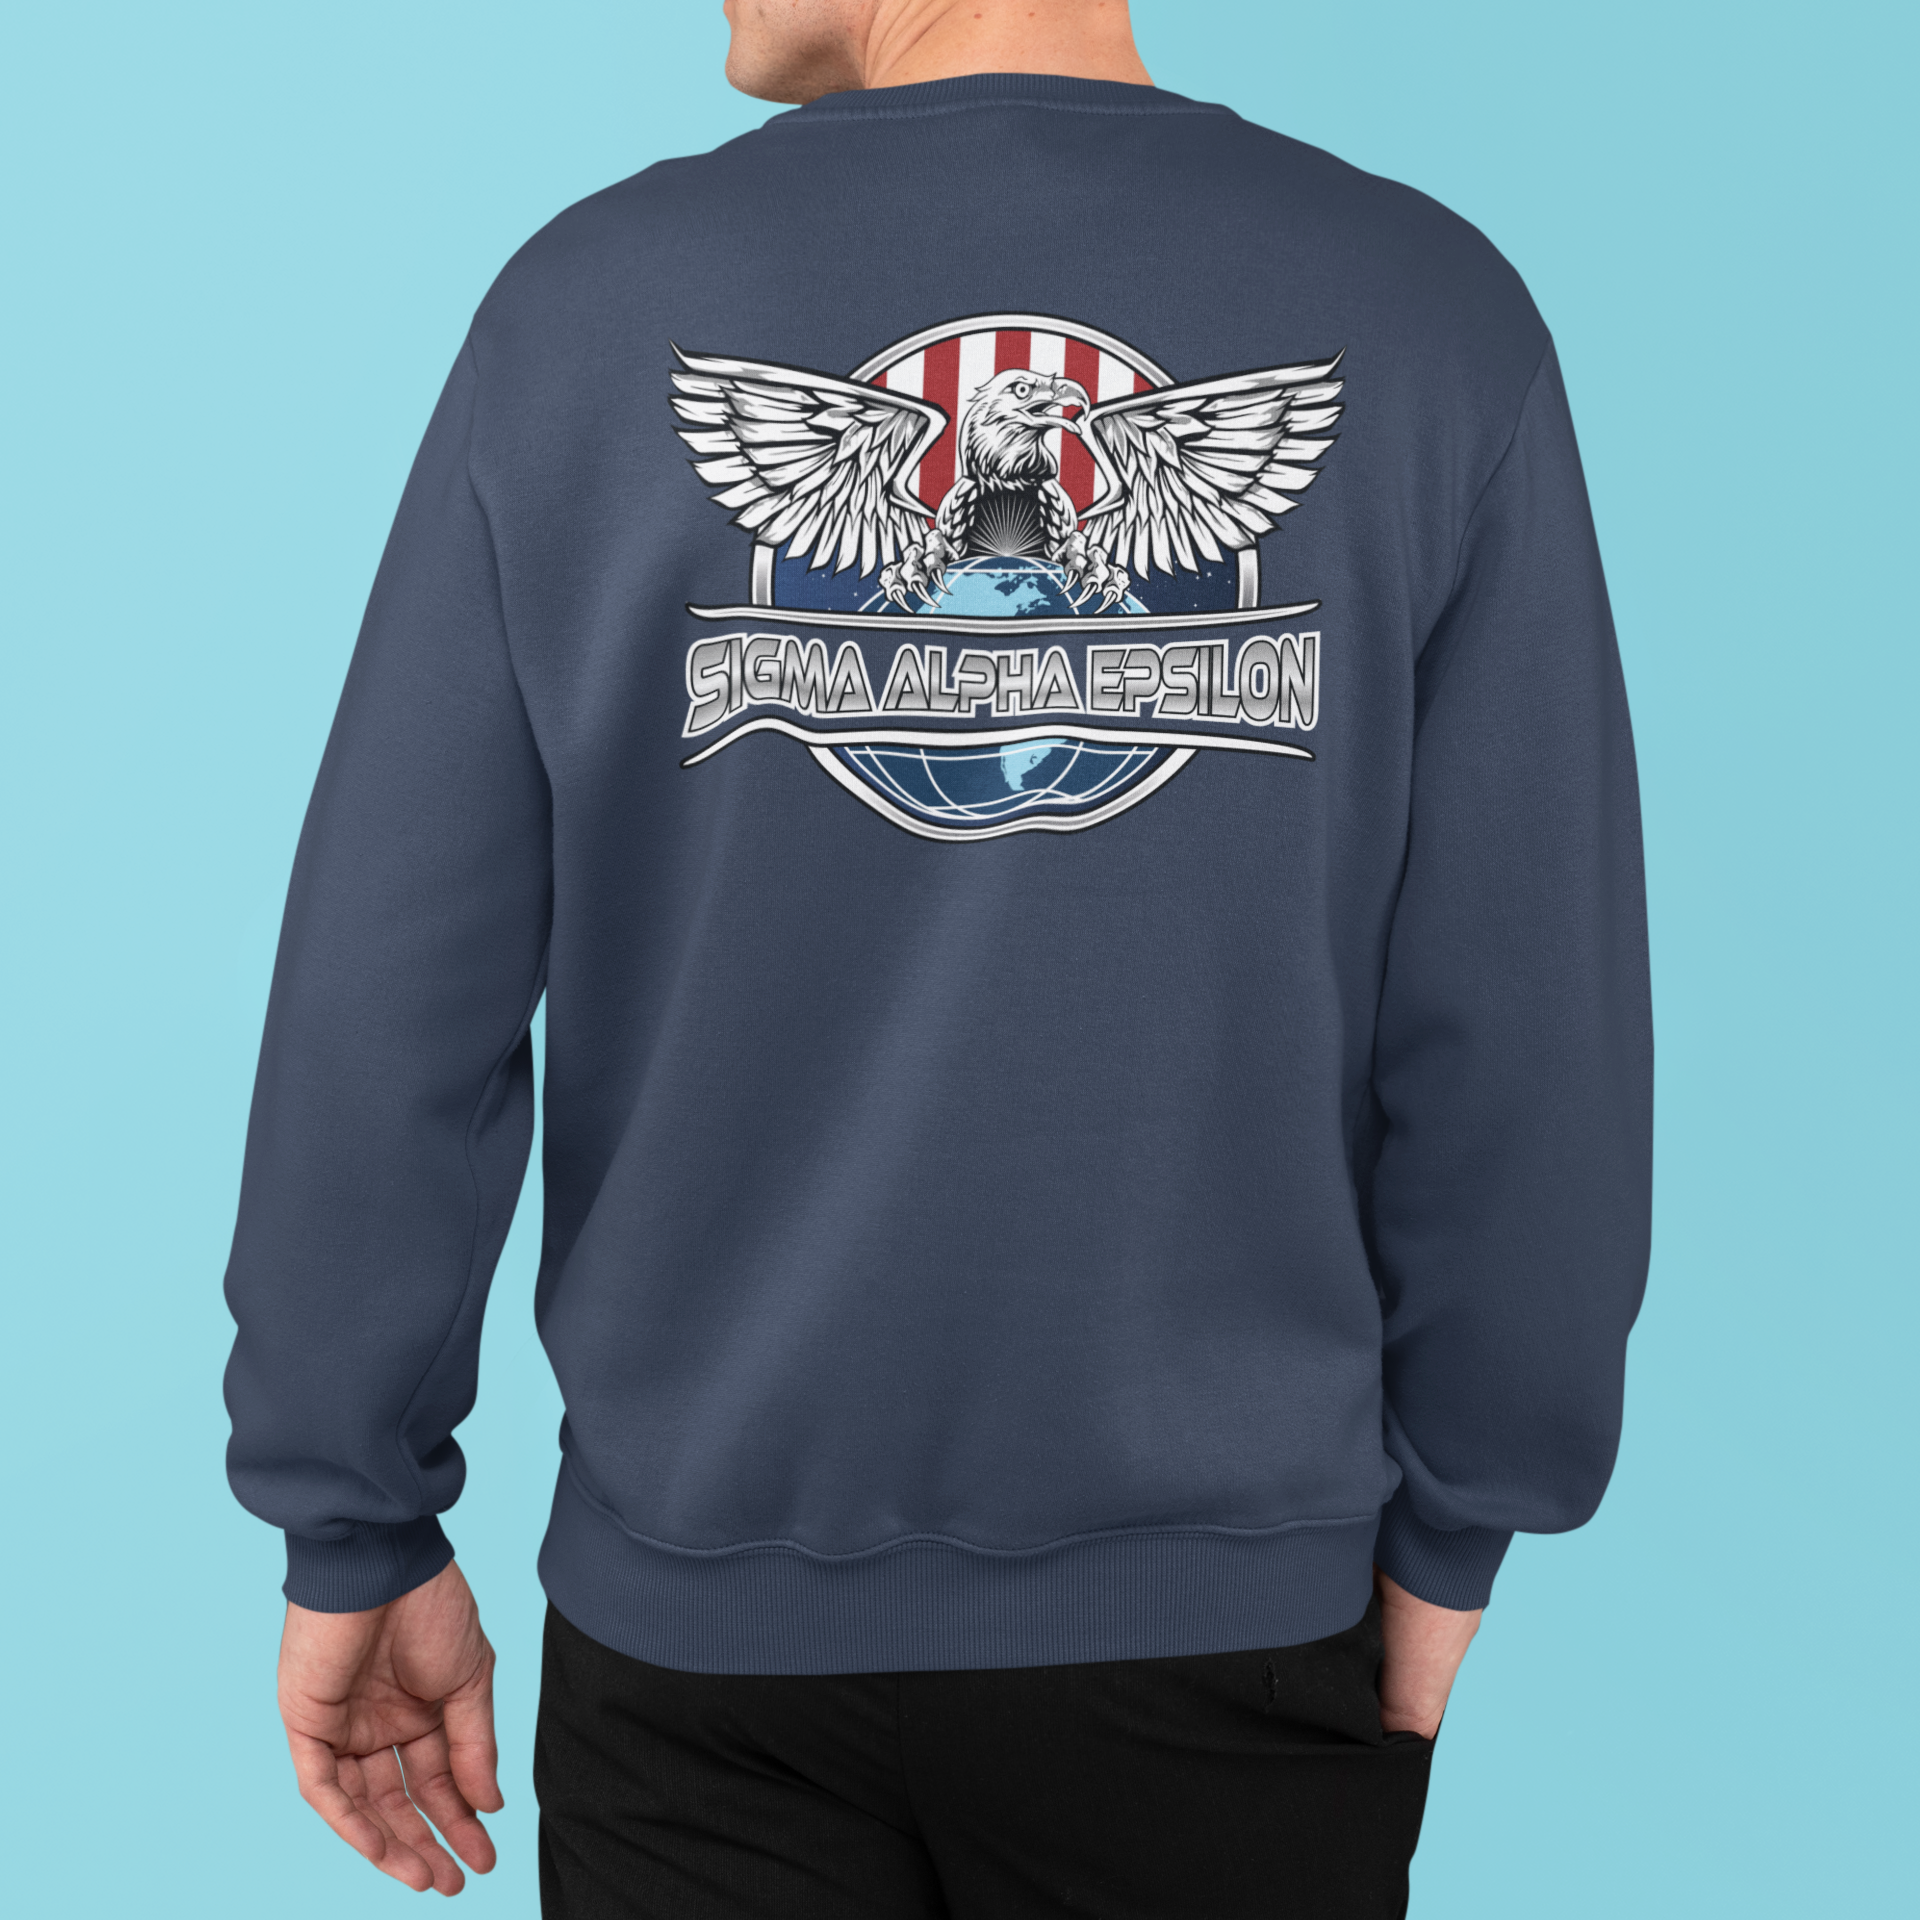 Navy Sigma Alpha Epsilon Graphic Crewneck Sweatshirt | The Fraternal Order | Sigma Alpha Epsilon Clothing and Merchandise back model 